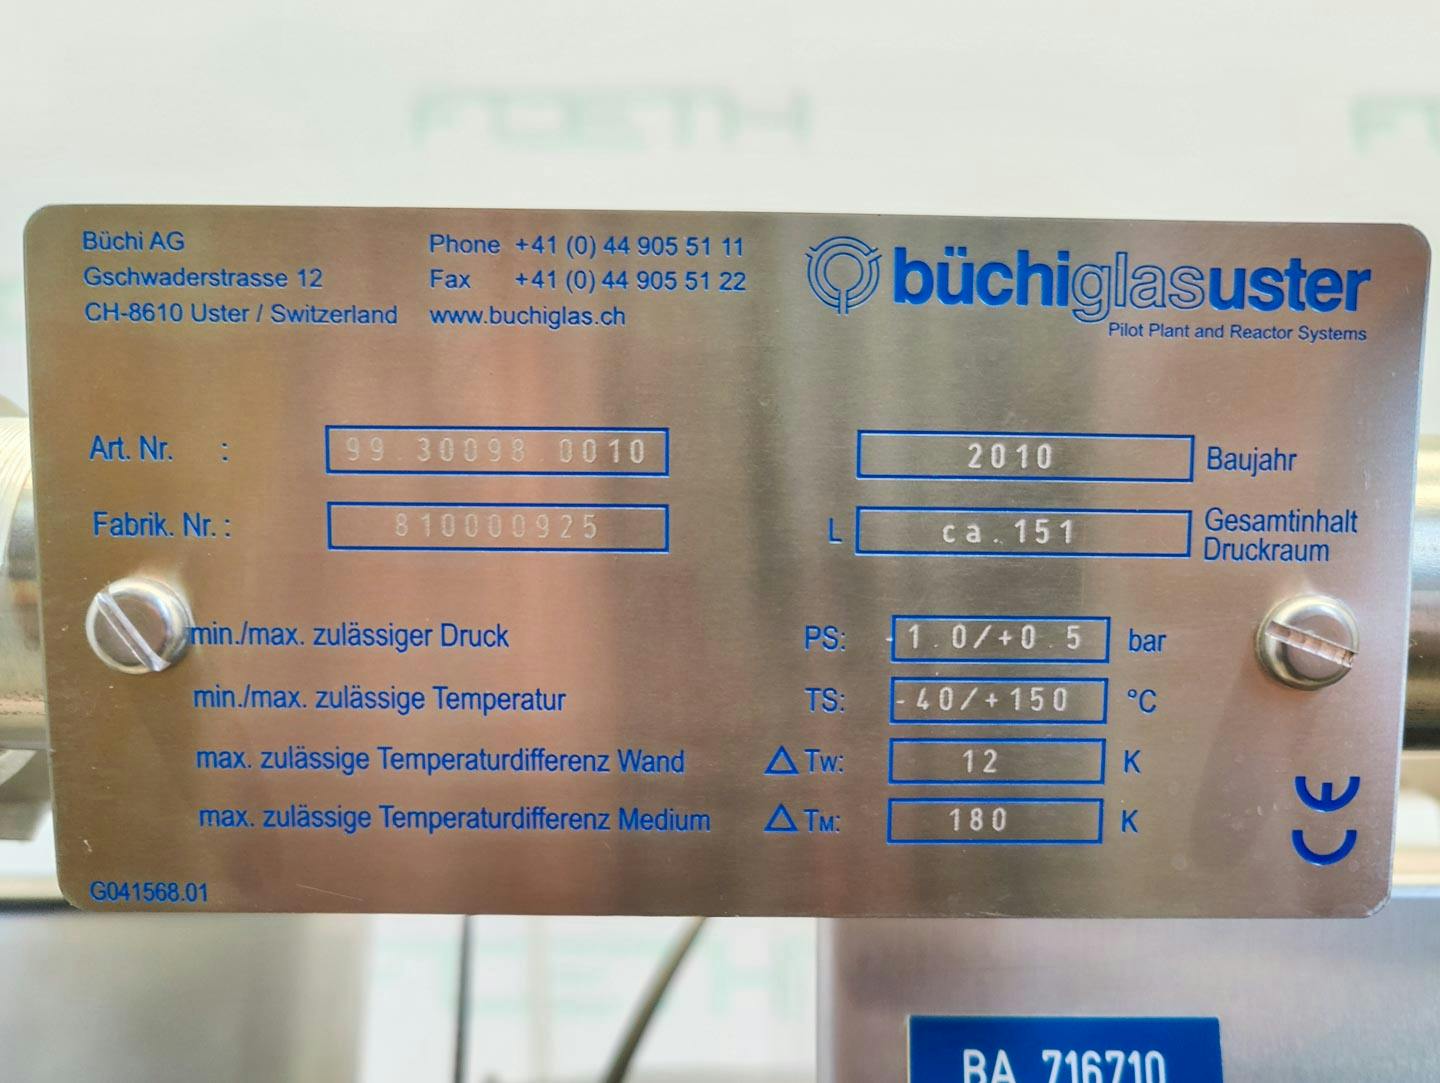 Büchi Filter 140 Ltr. (Ex) - filter reactor - Nutsche filter - image 13